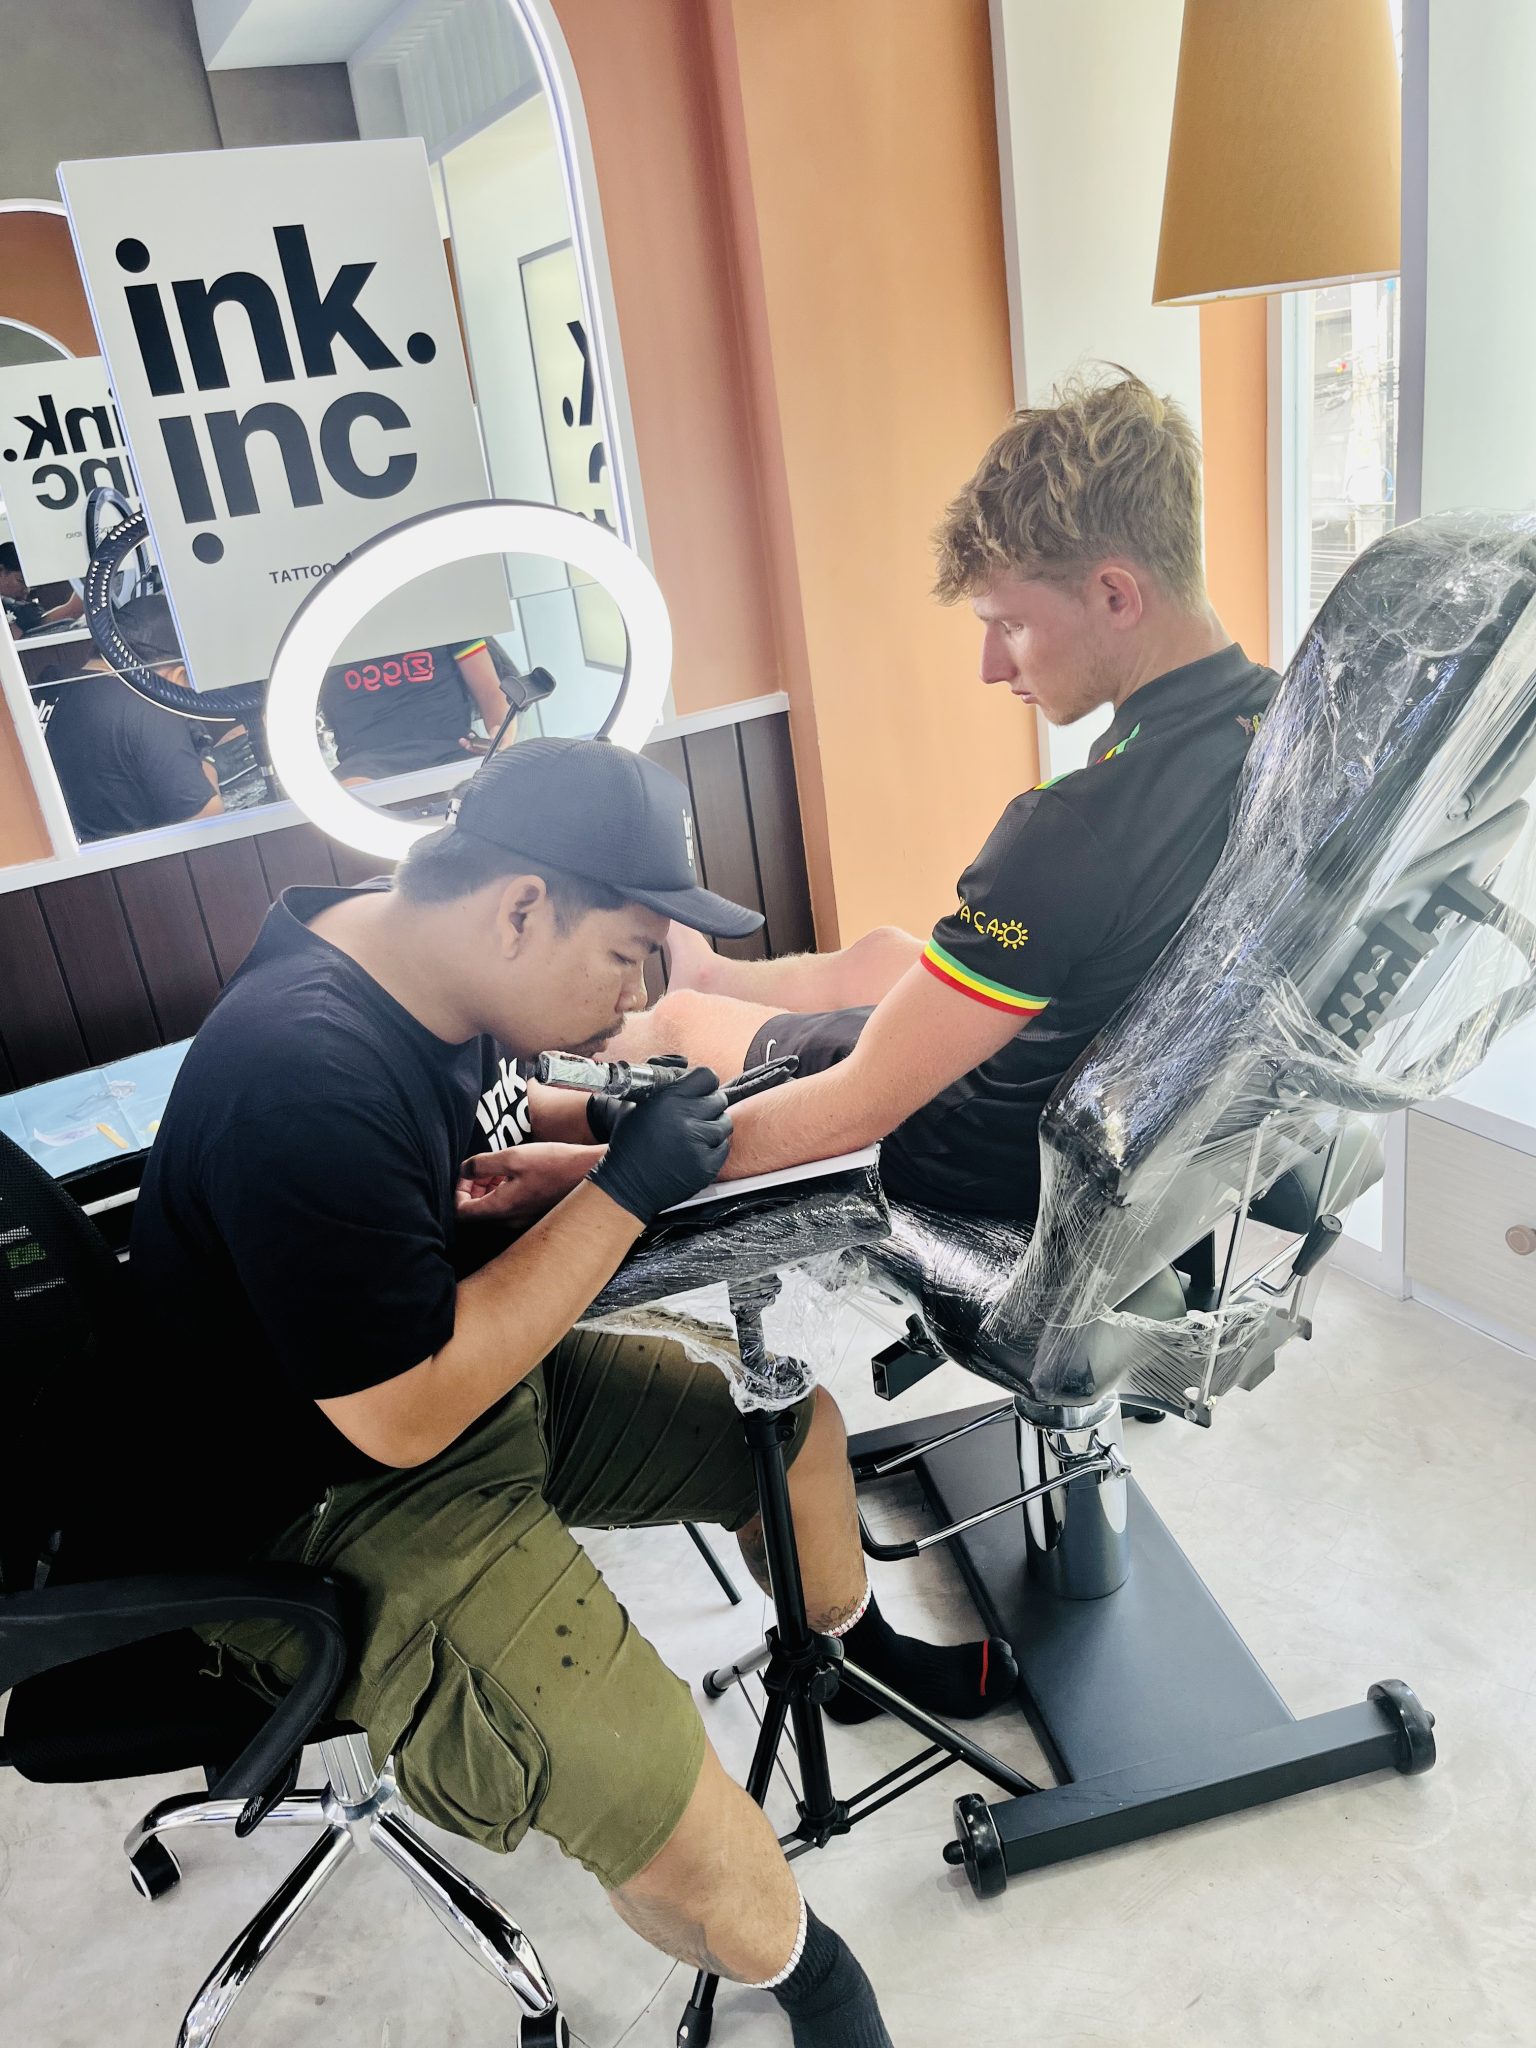 INk inc tattoo studio in Seminyak Bali